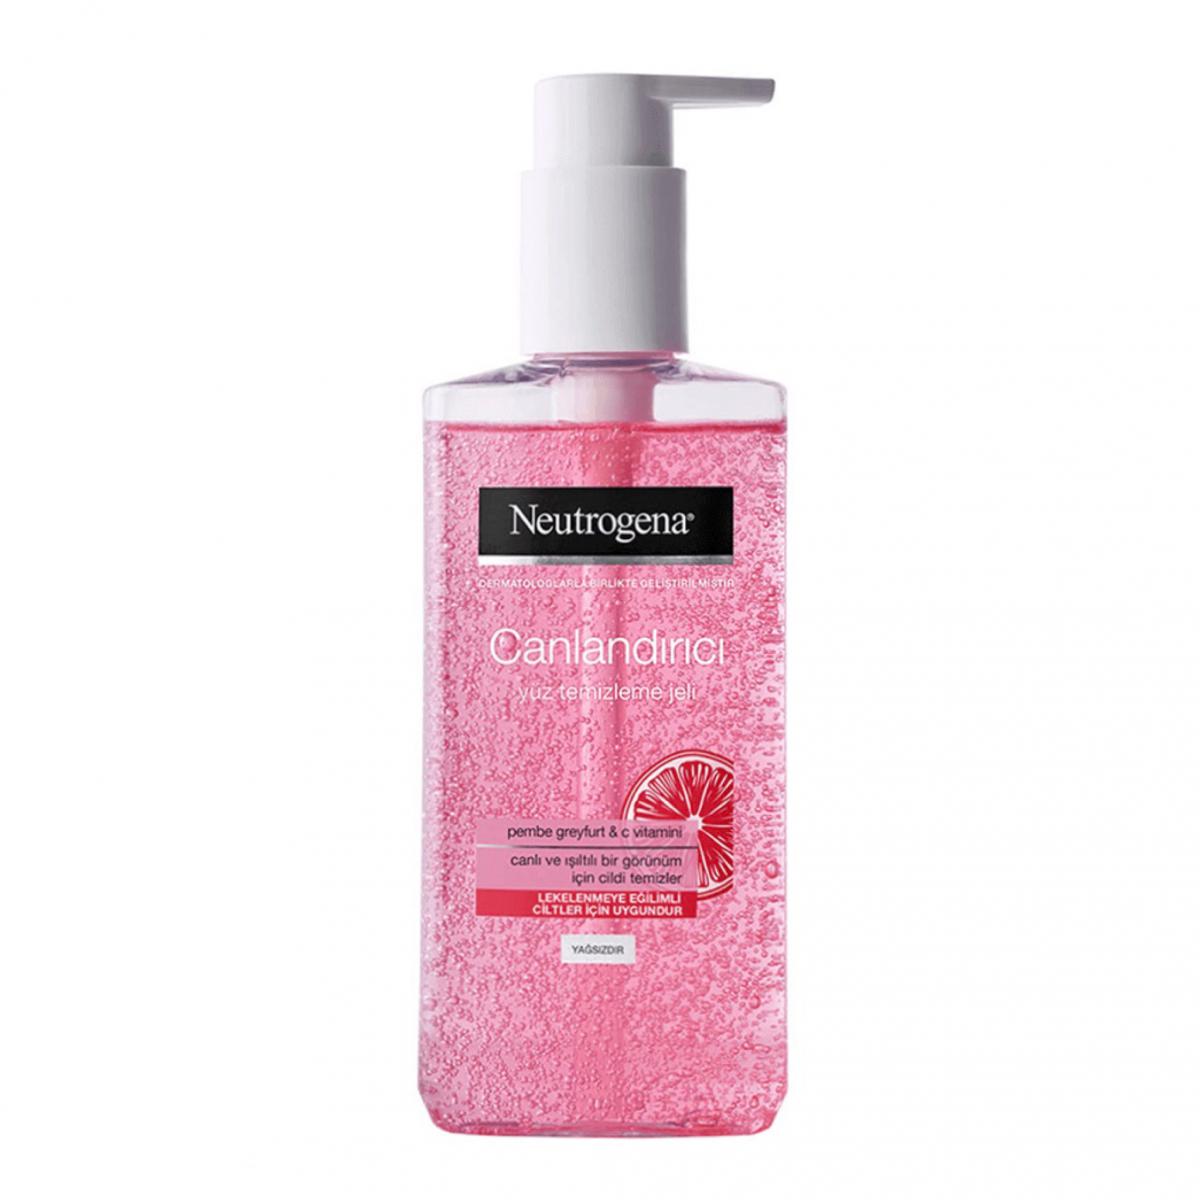 ژل شستشوى گریپ فروت  - Visibly clear pink grapefruit facial wash